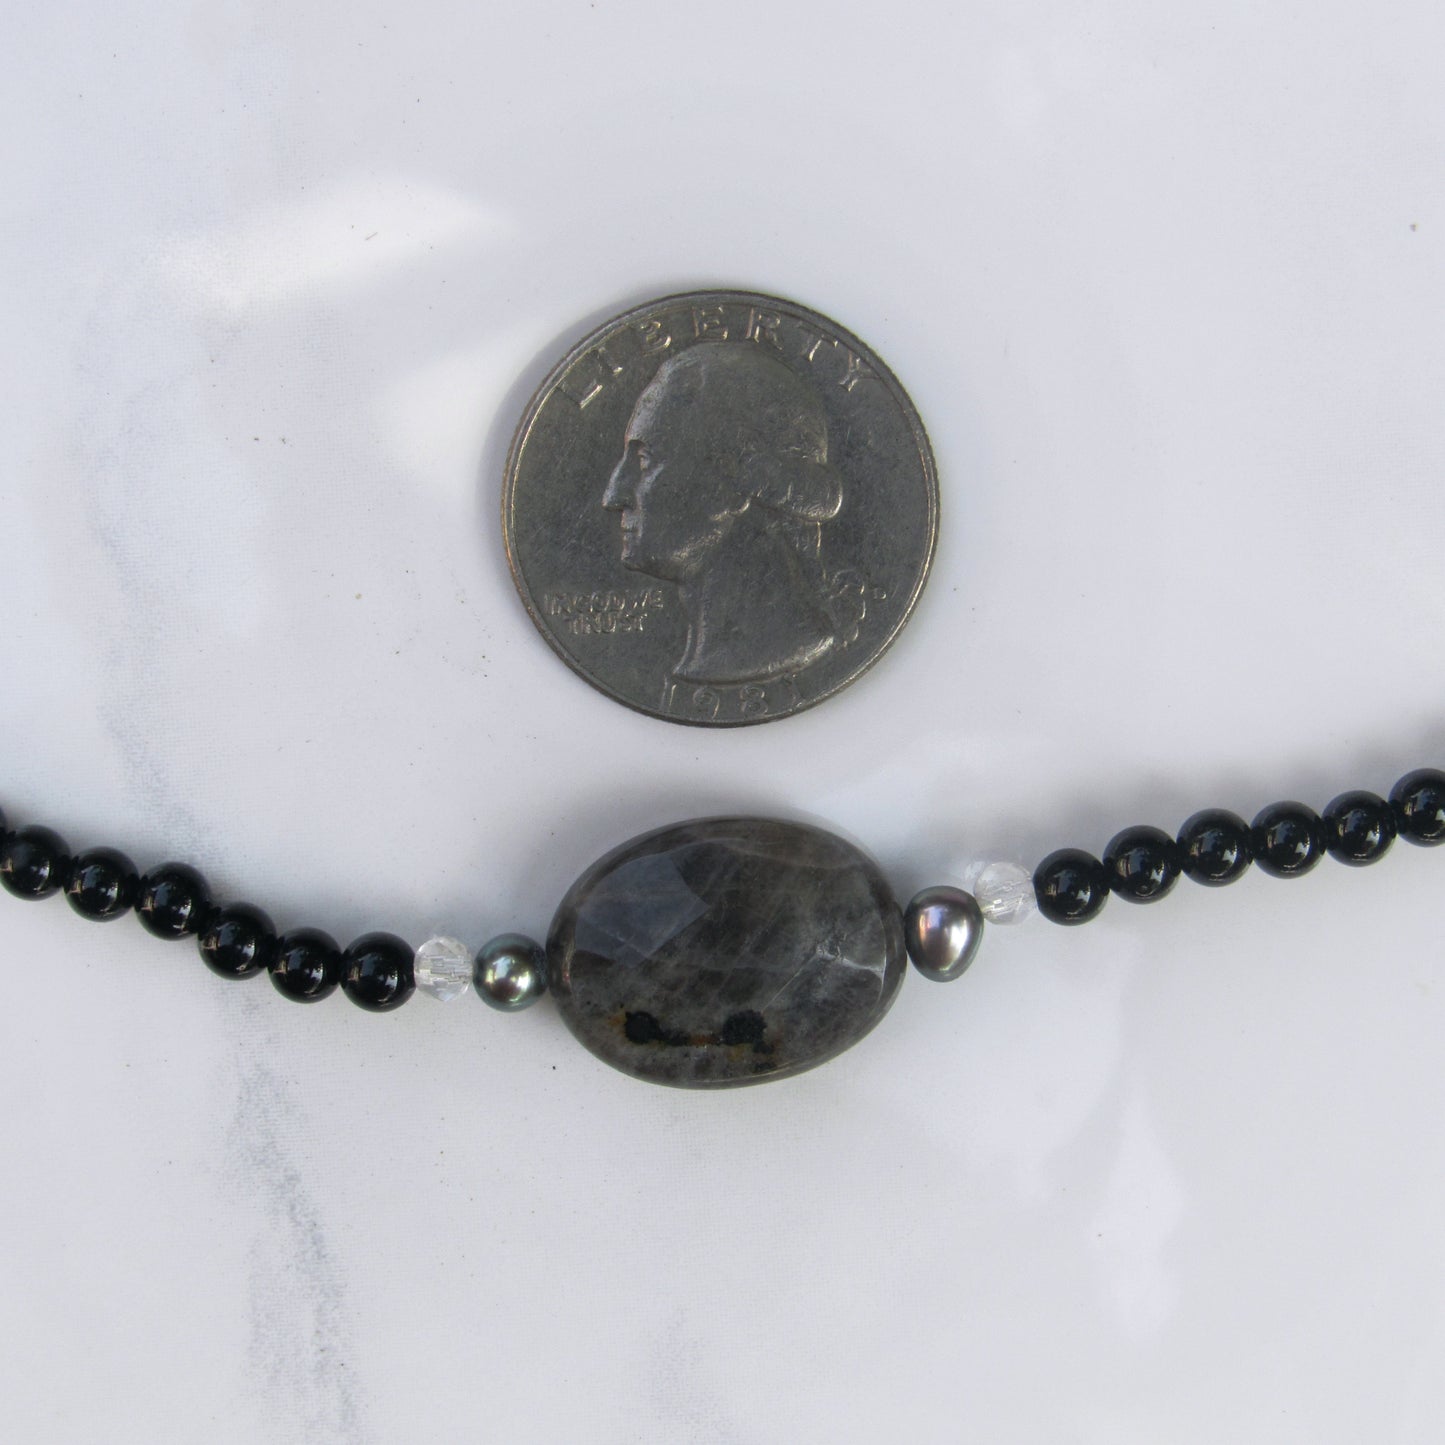 Labradorite, Clear Quartz, Onyx gemstone, Freshwater Pearl, Sterling Silver Choker Necklace